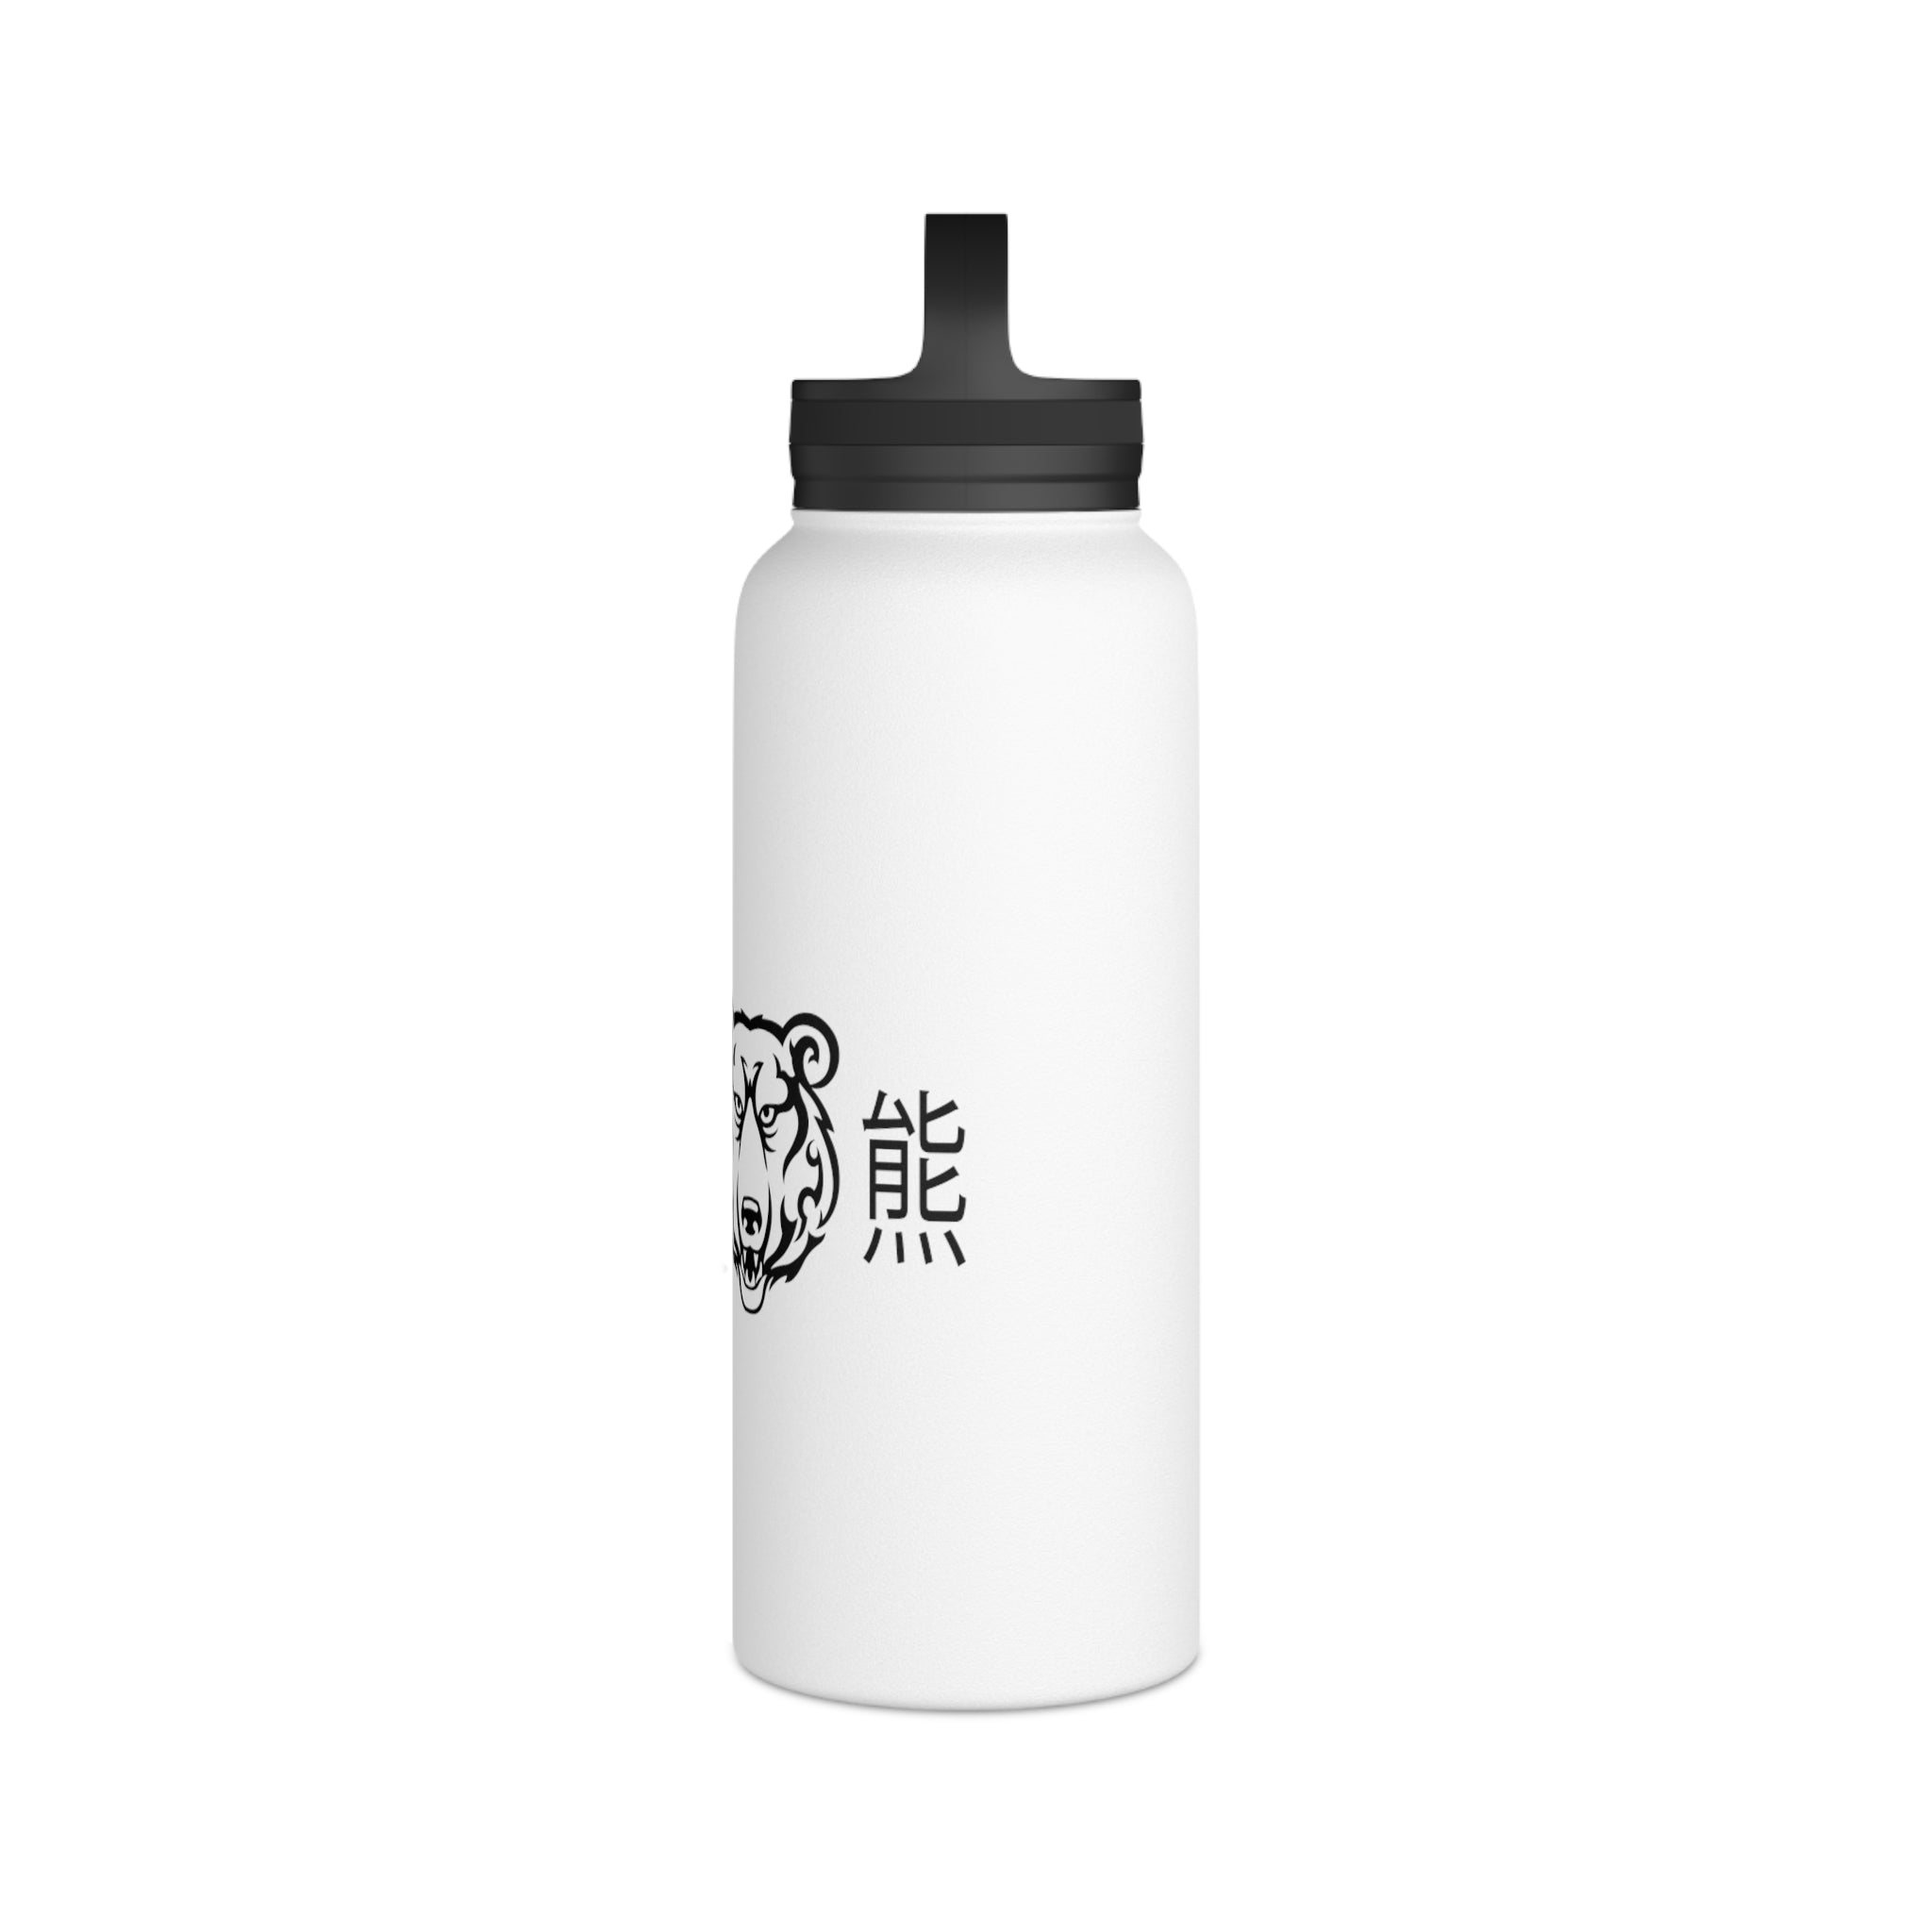 KUMA Stainless Steel Water Bottle